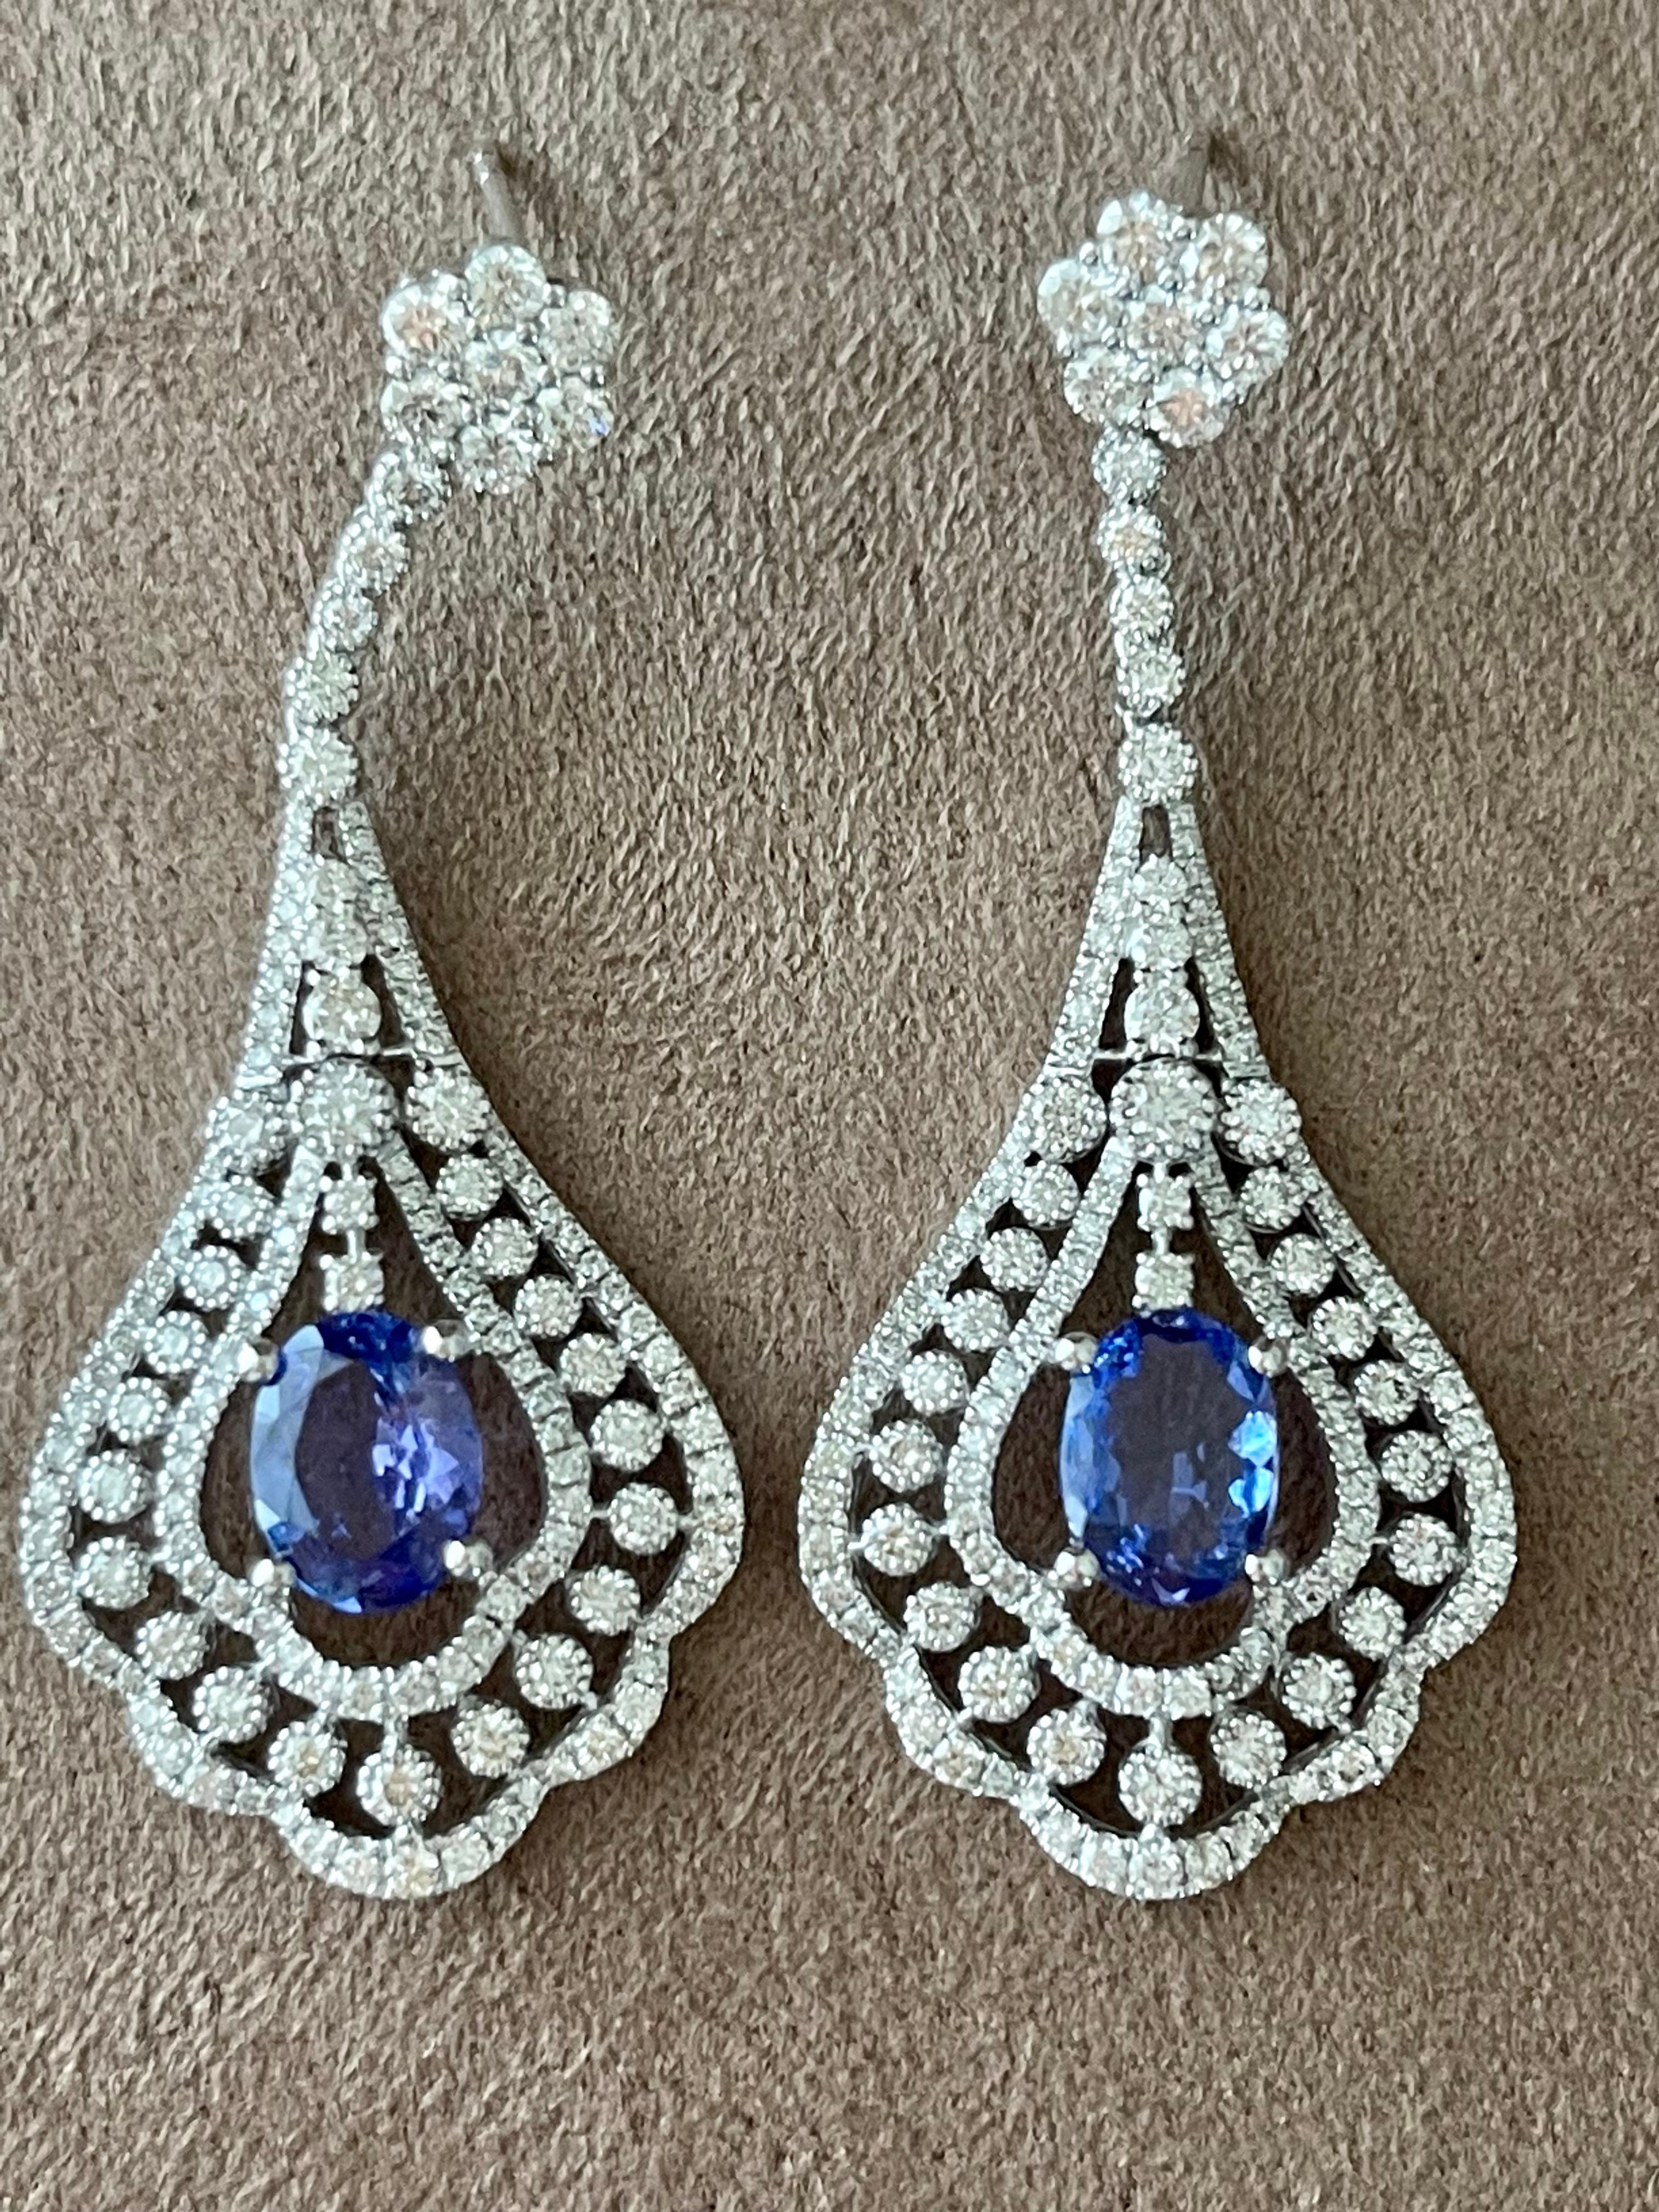 Brilliant Cut 18k White Gold Chandelier Earrings Tanzanite Diamonds For Sale